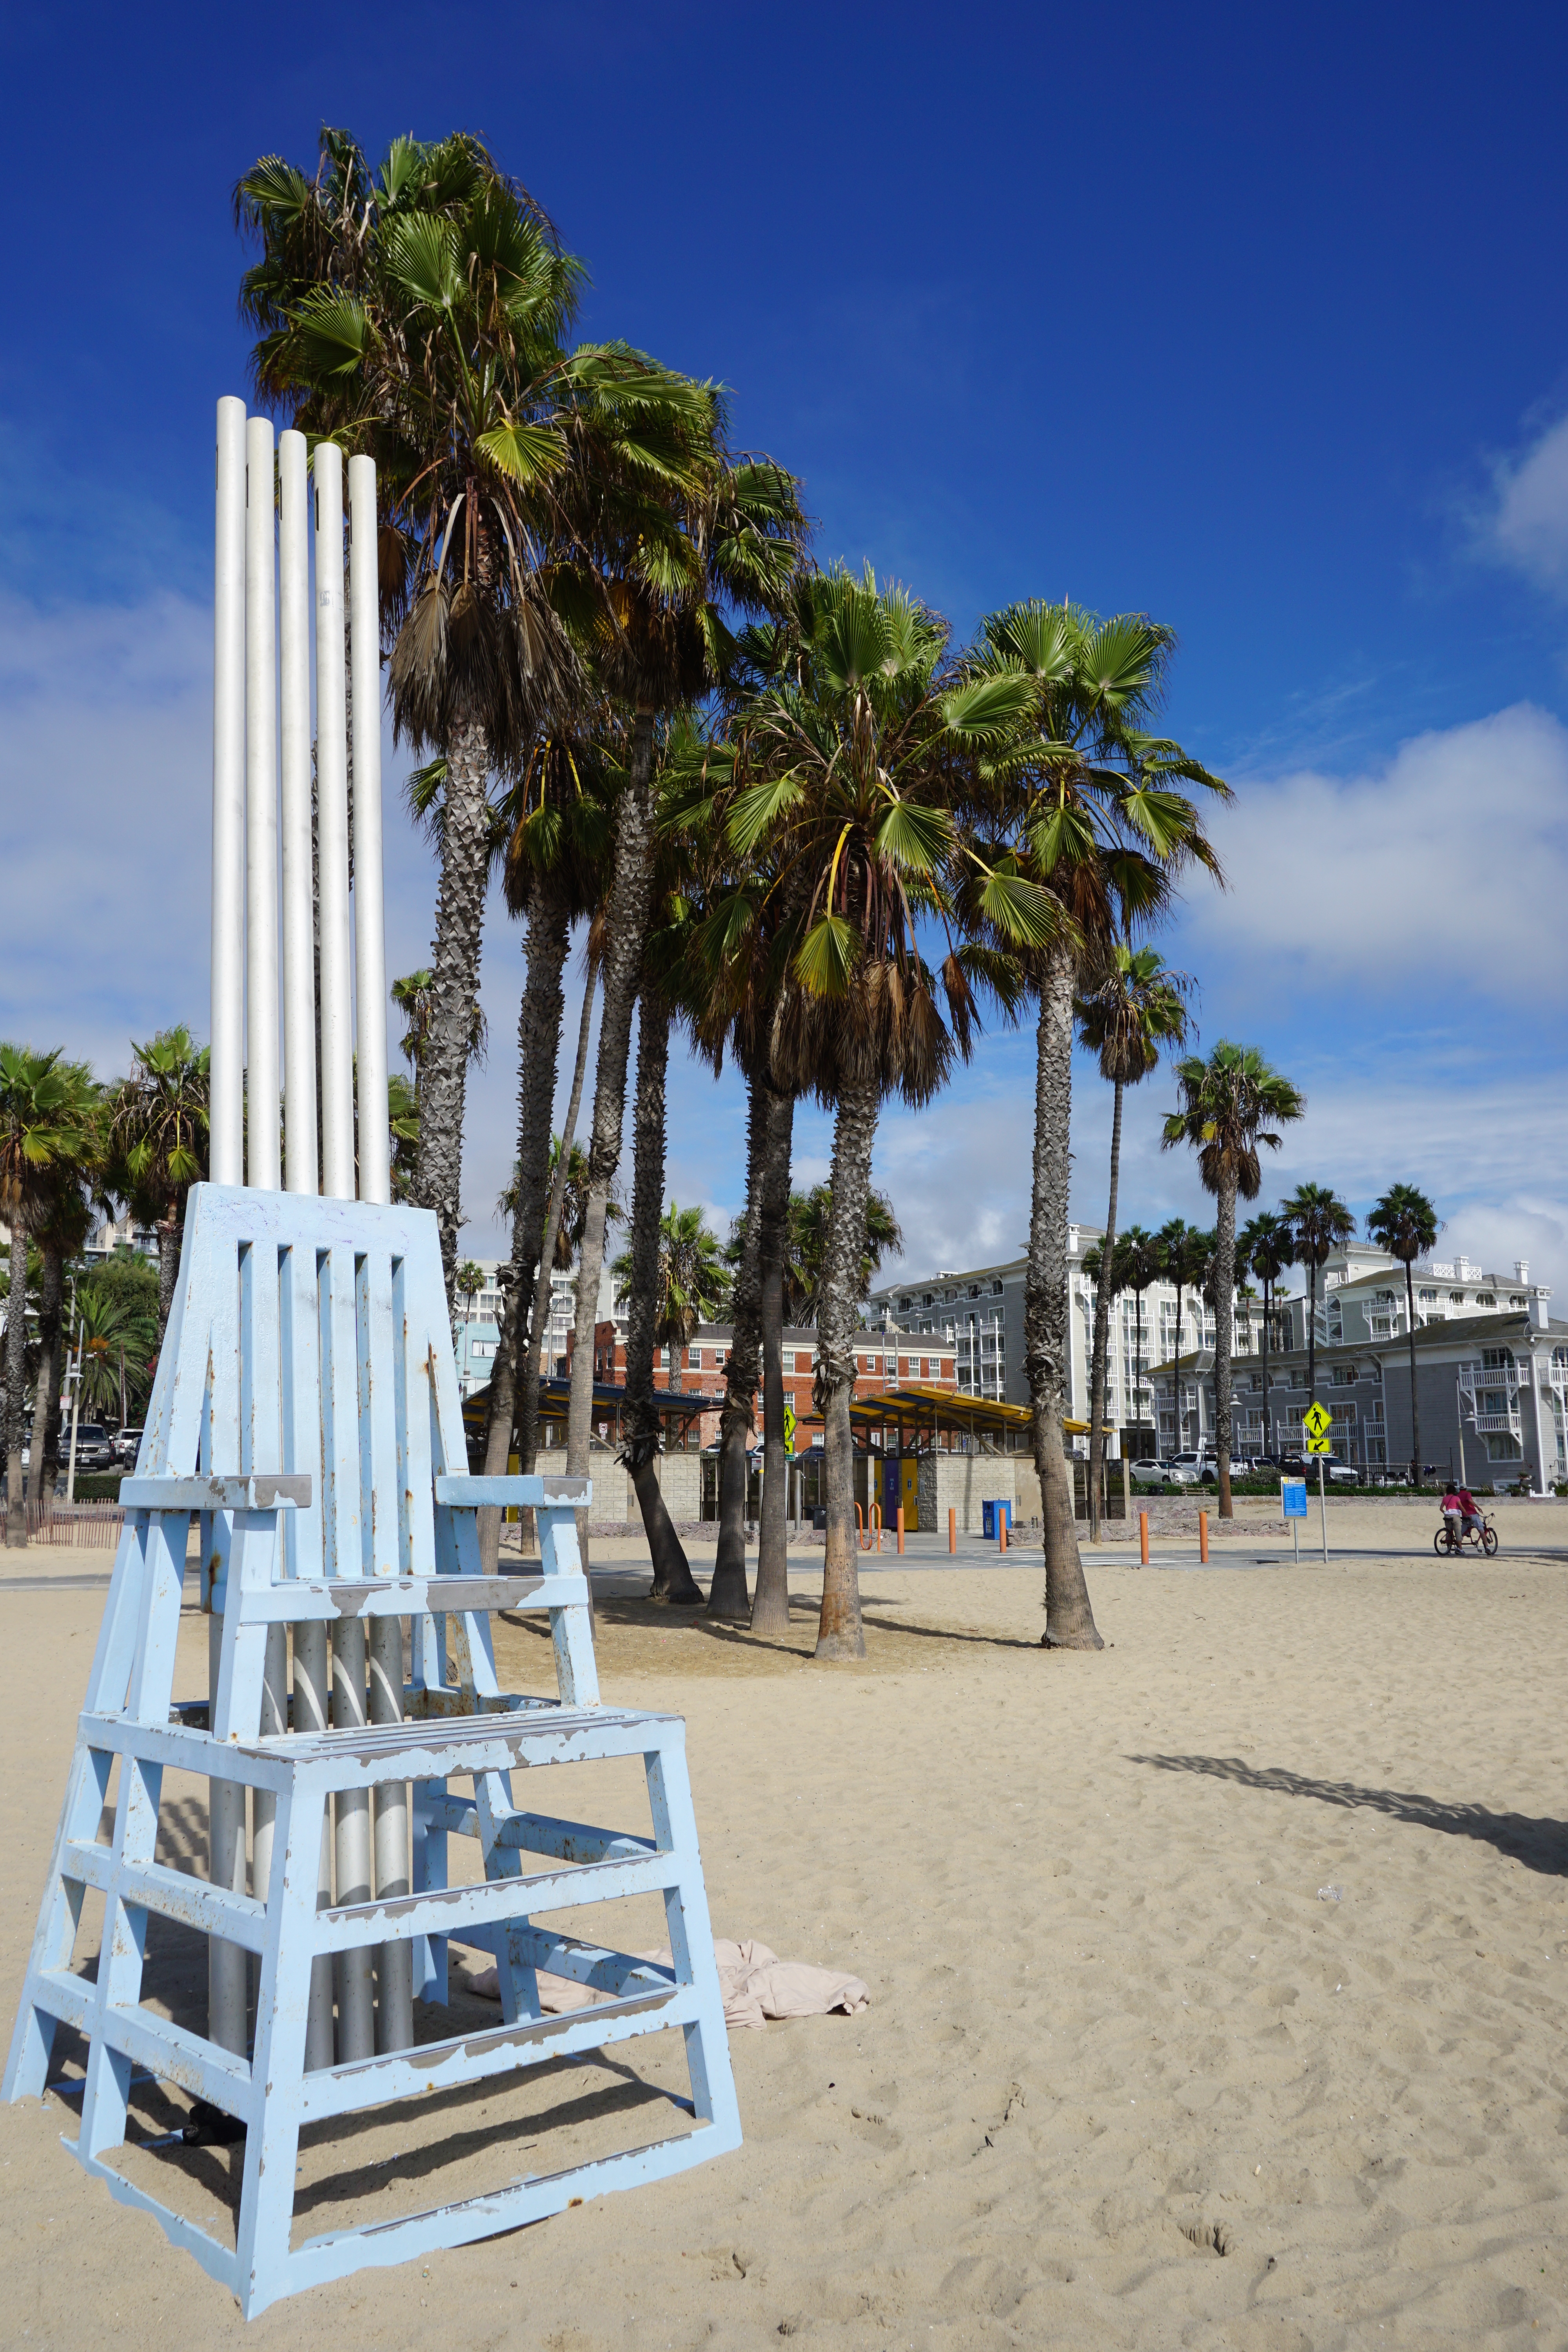 VIDEO: Natty P explores Venice Beach, California